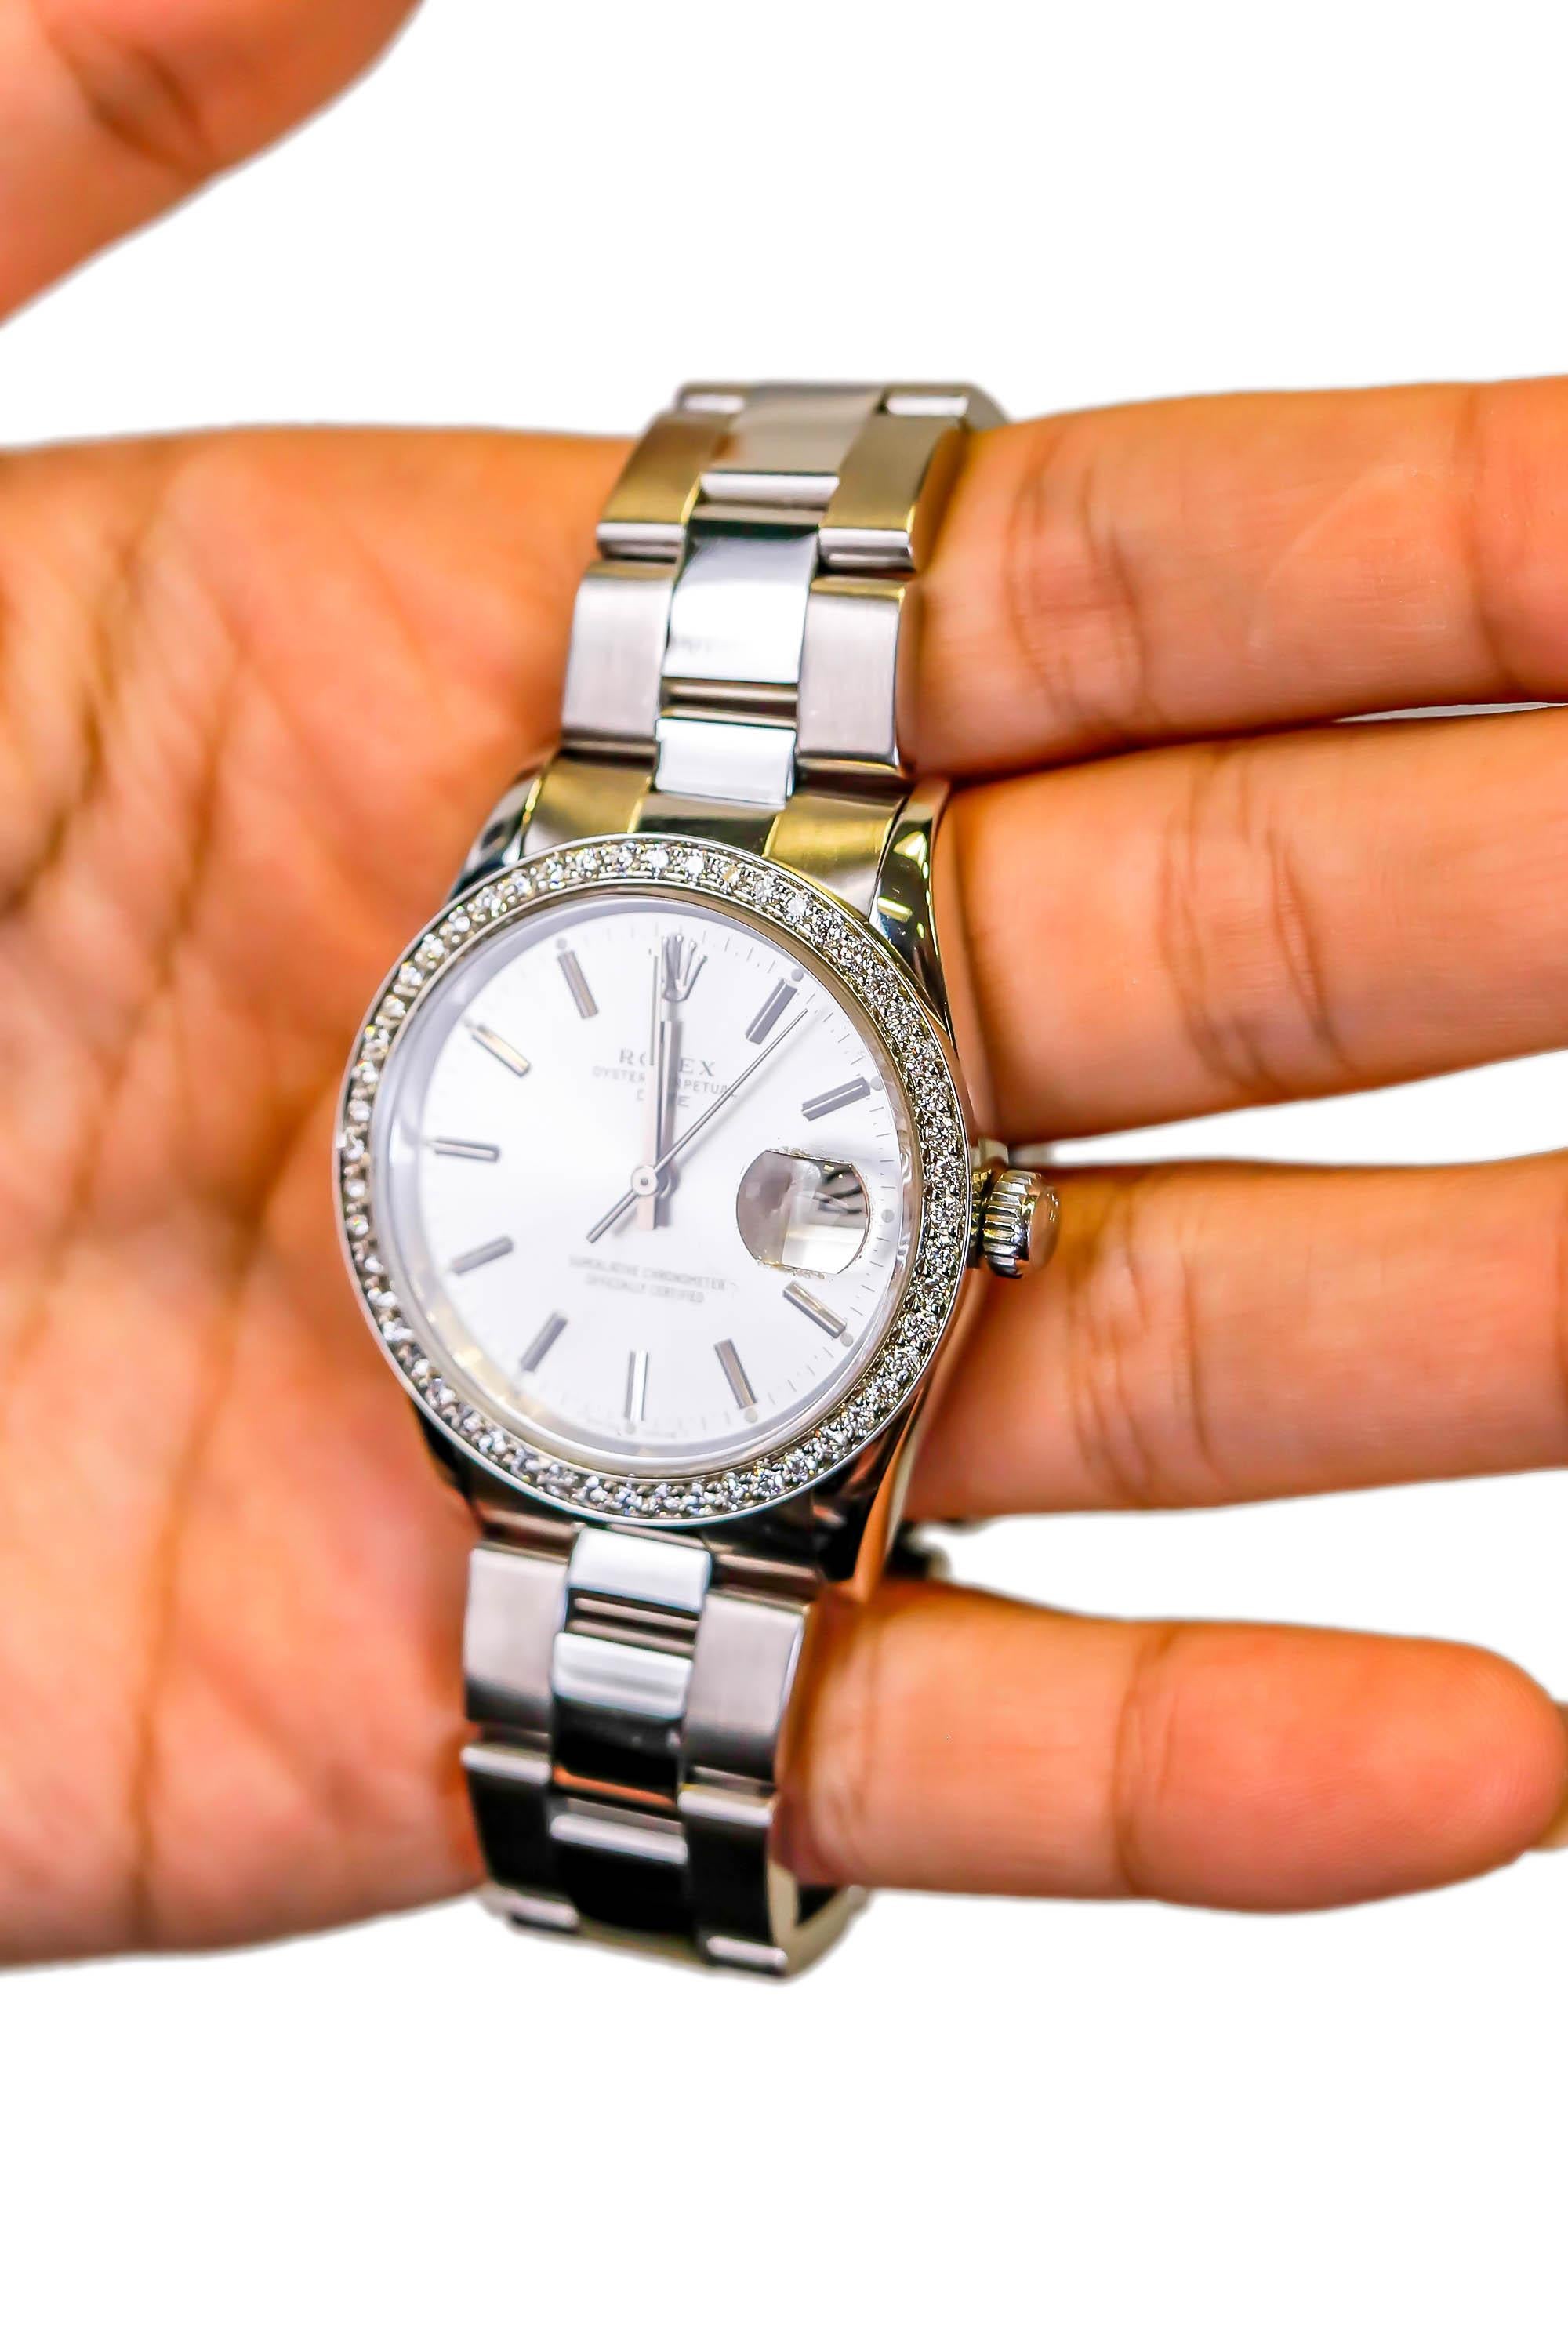 Rolex Stainless Steel Datejust Diamond Bezel Automatic Wristwatch Men’s For Sale 1